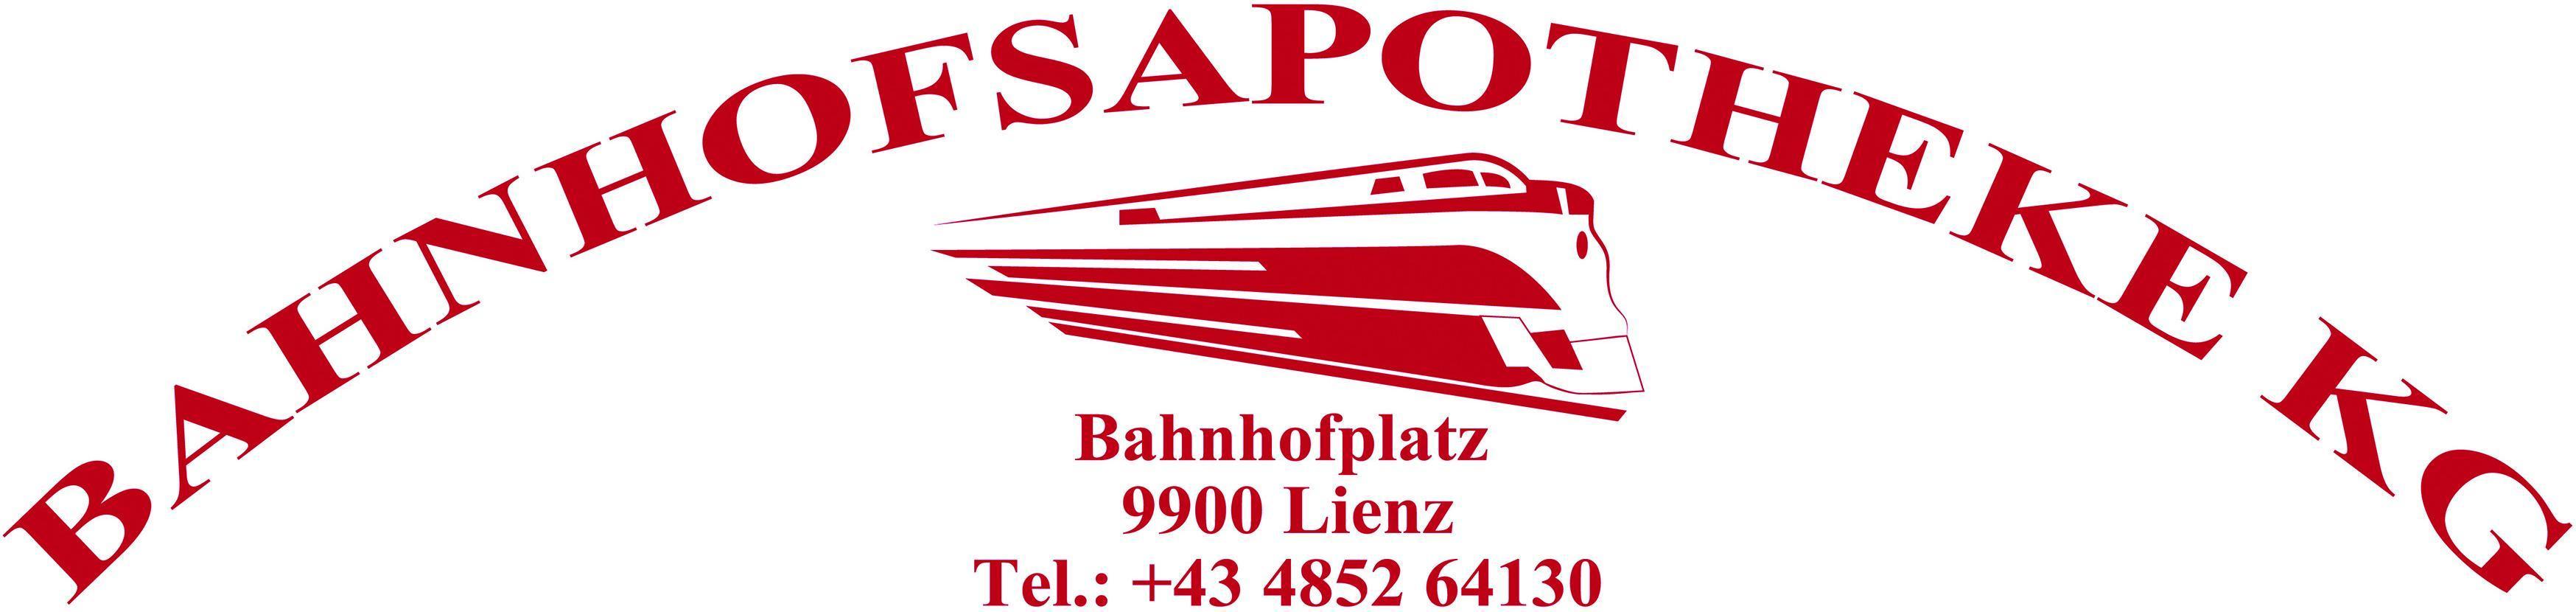 Logo Bahnhofsapotheke KG